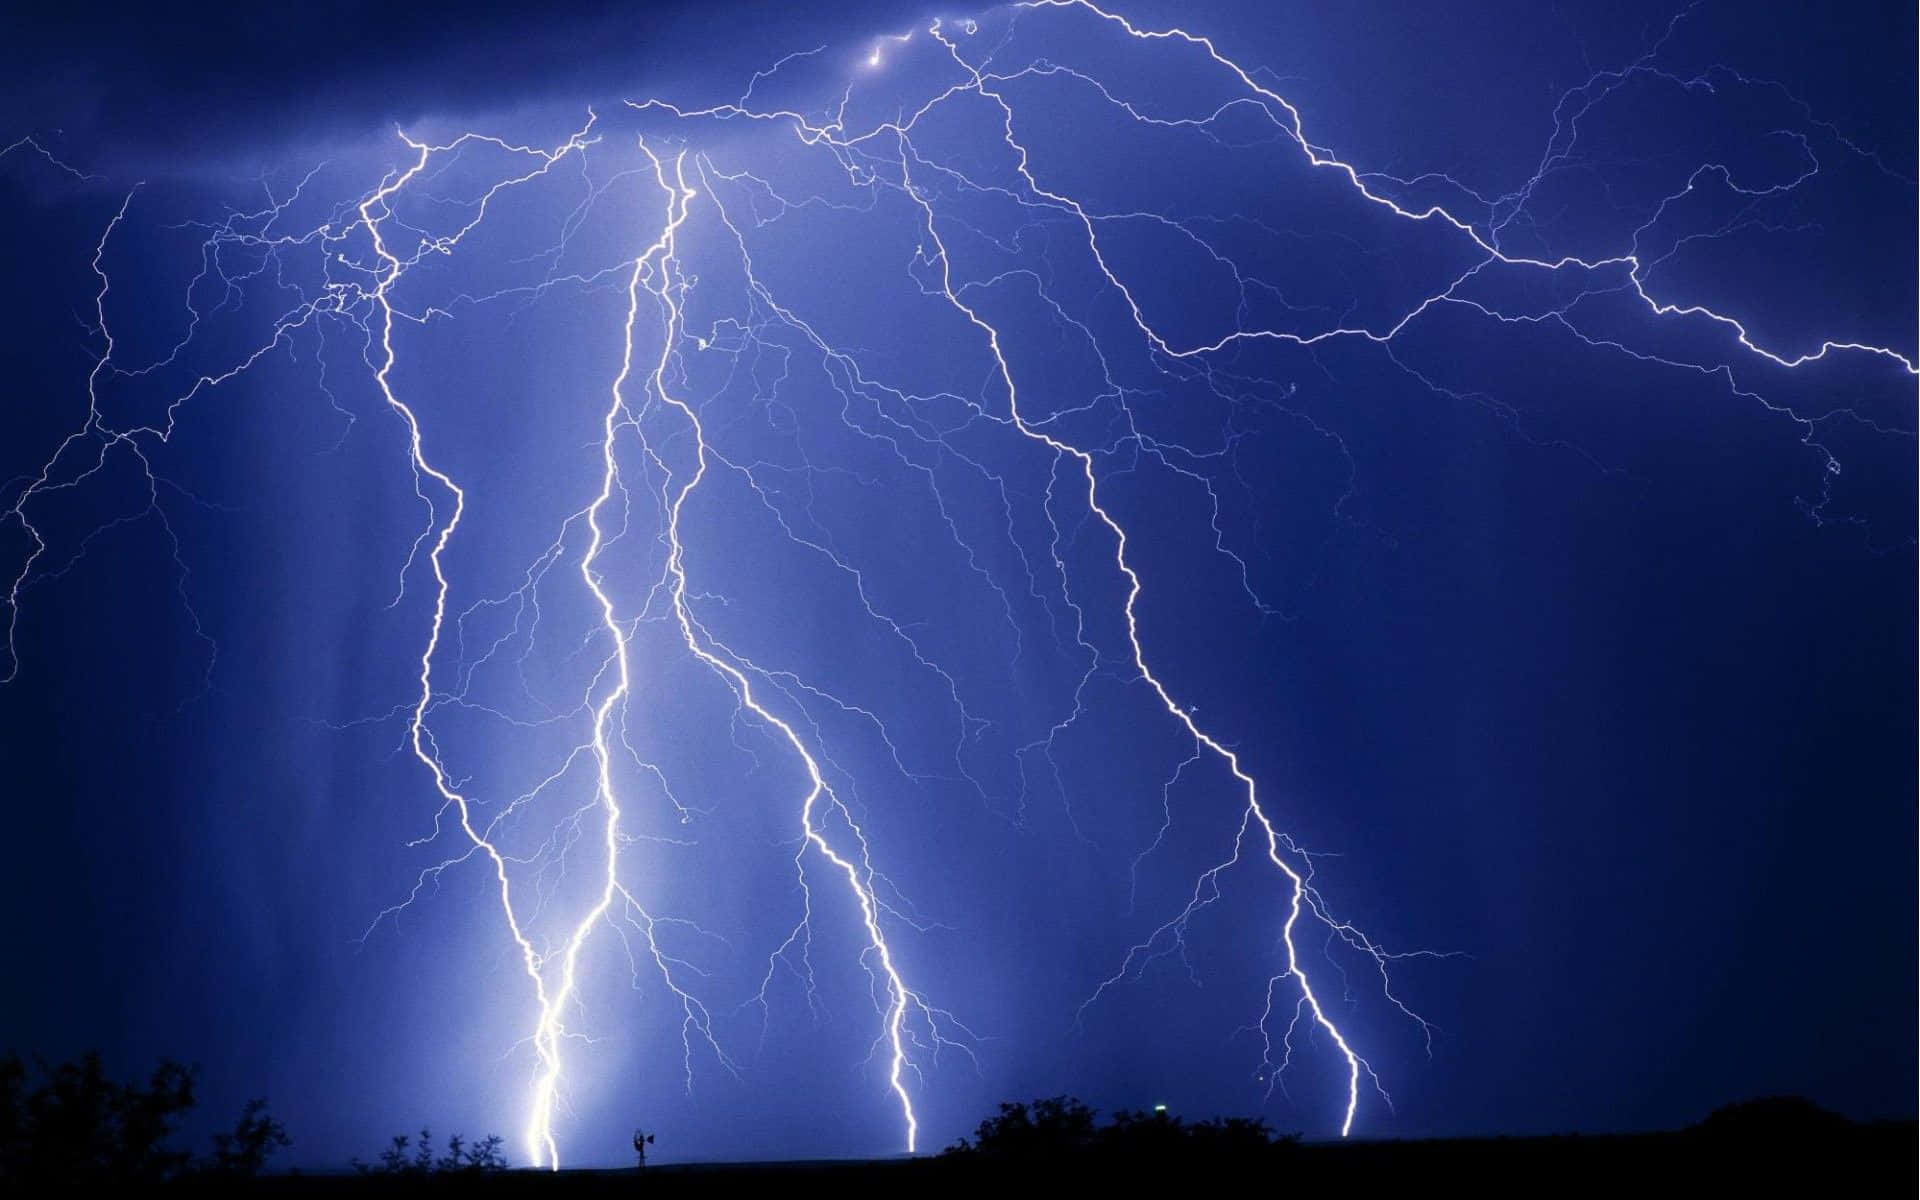 An intense thunderstorm with brilliant blue lightning. Wallpaper